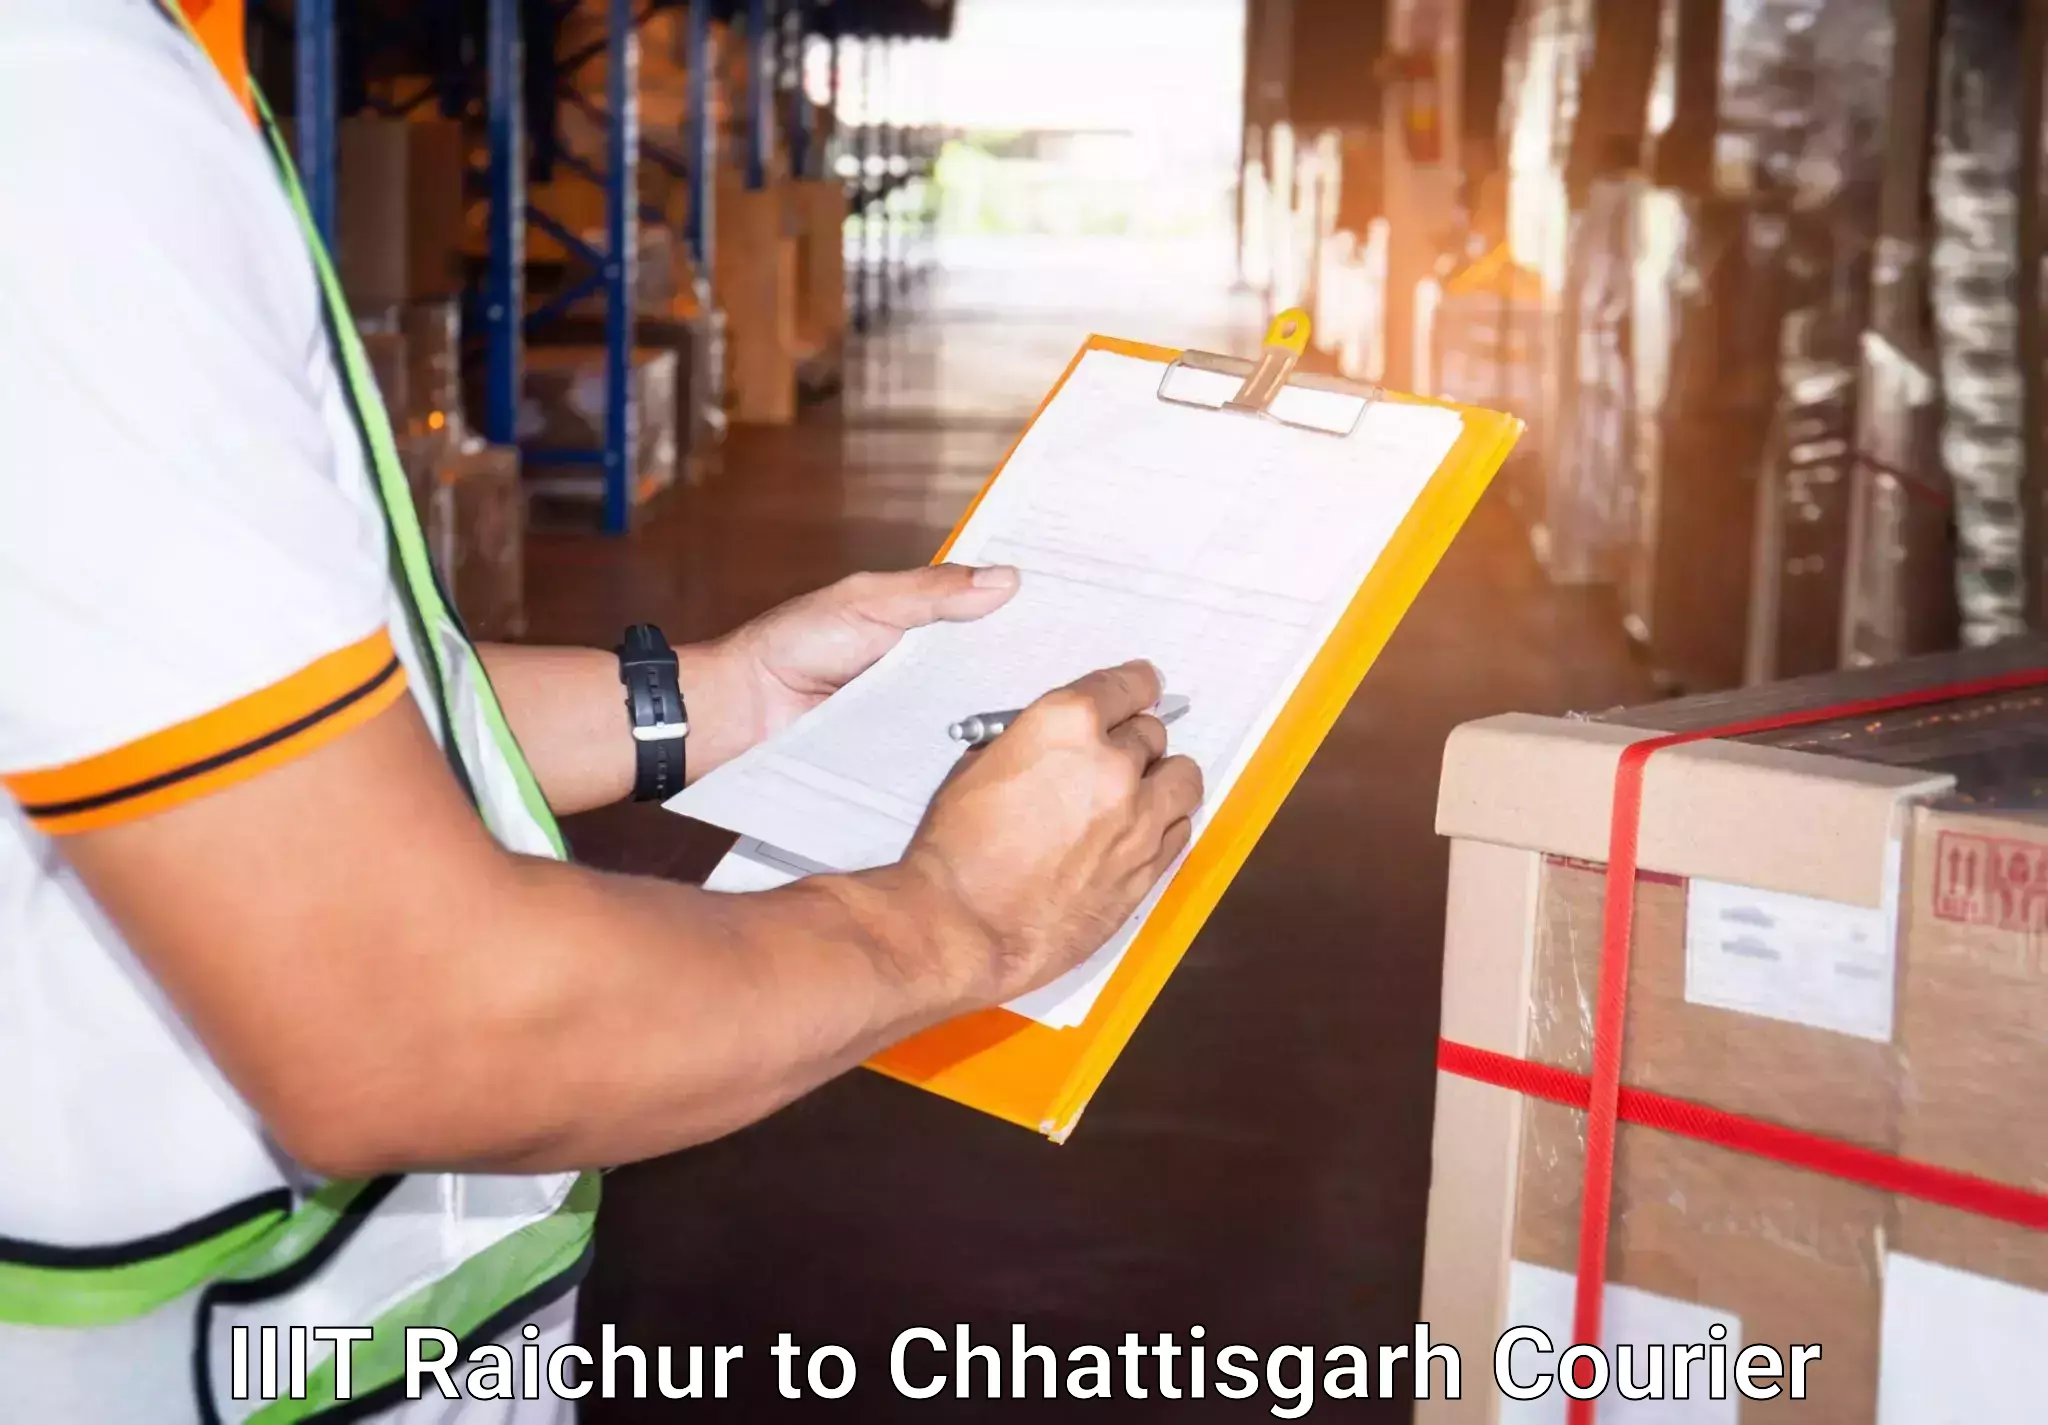 Luggage transport consultancy IIIT Raichur to Bijapur Chhattisgarh